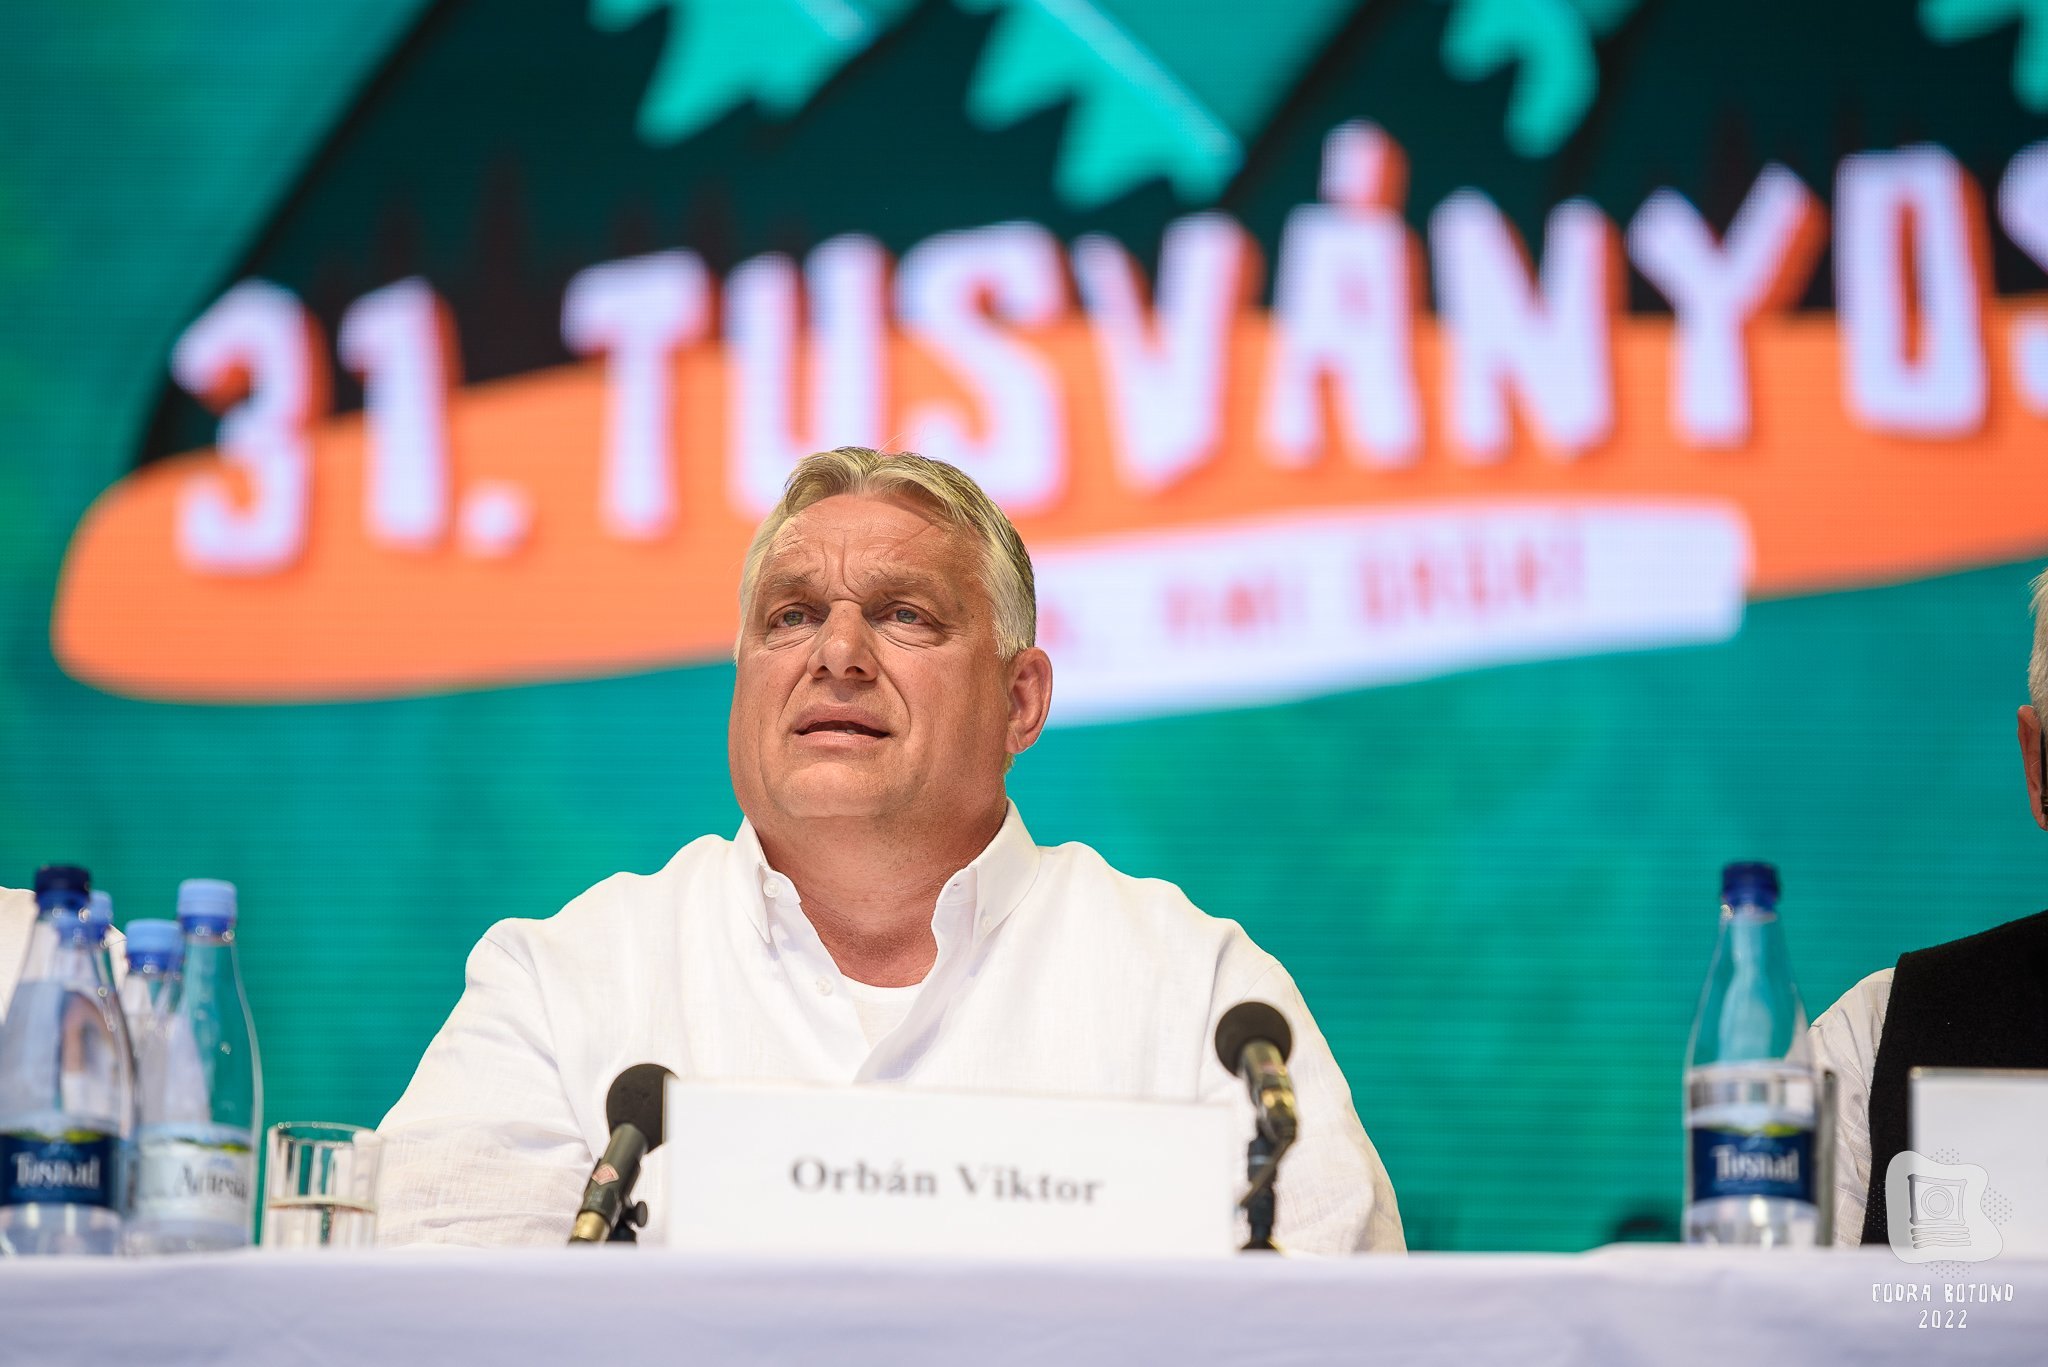 Nicolae Ciucă: megvitatják a koalícióban Orbán Viktor tusványosi kijelentéseit